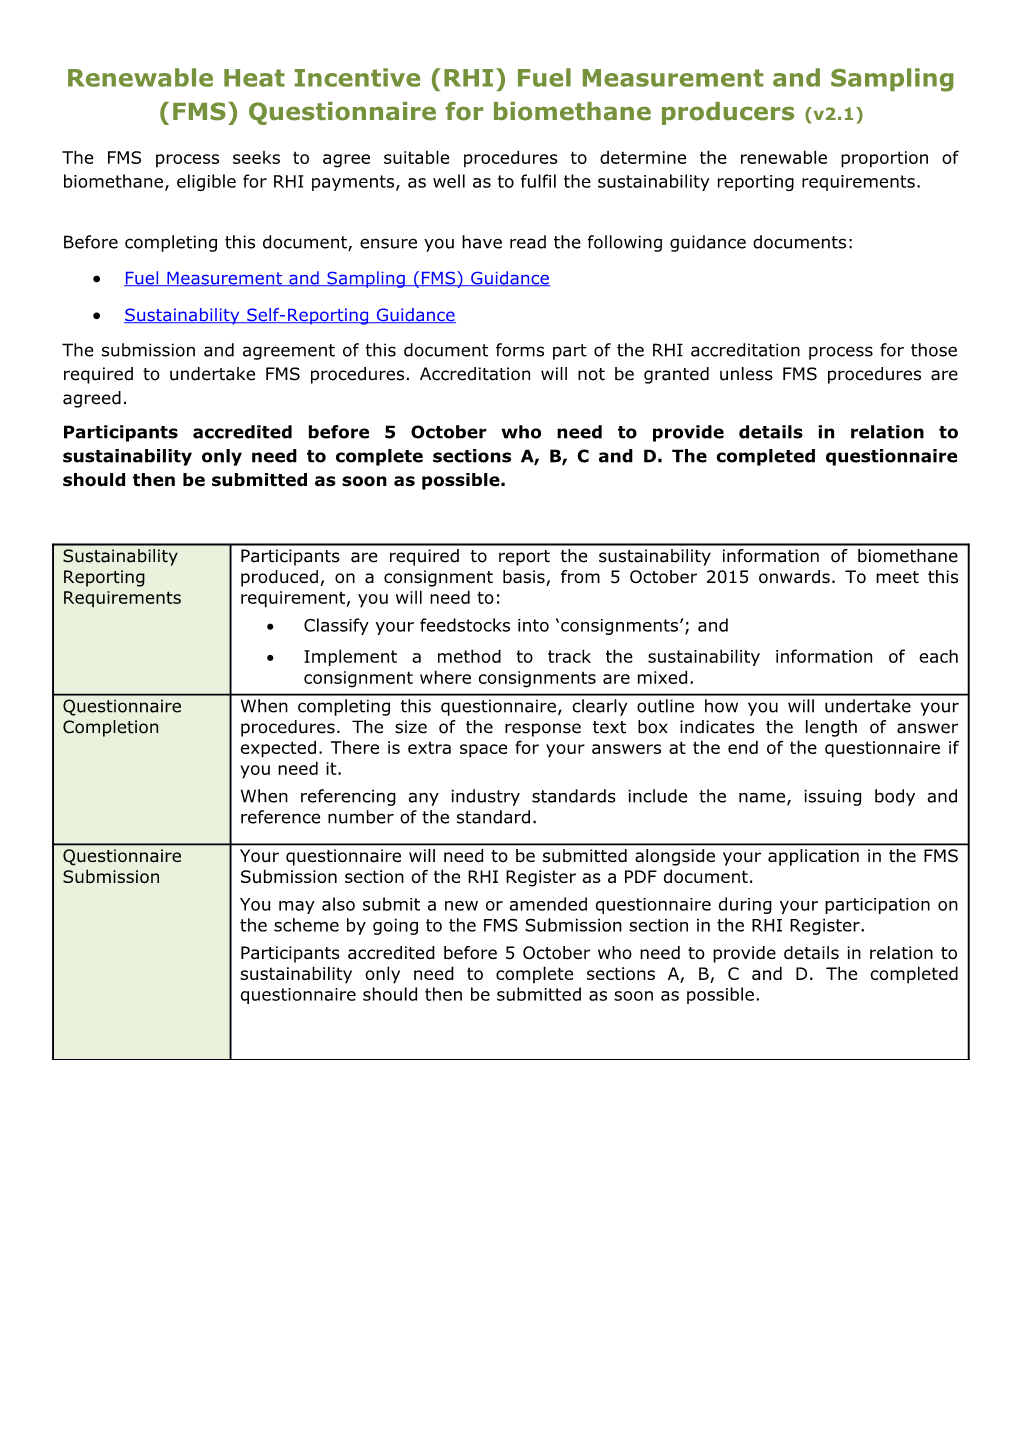 Biomethane Fuel Measurement and Sampling Questionnaire V2.1